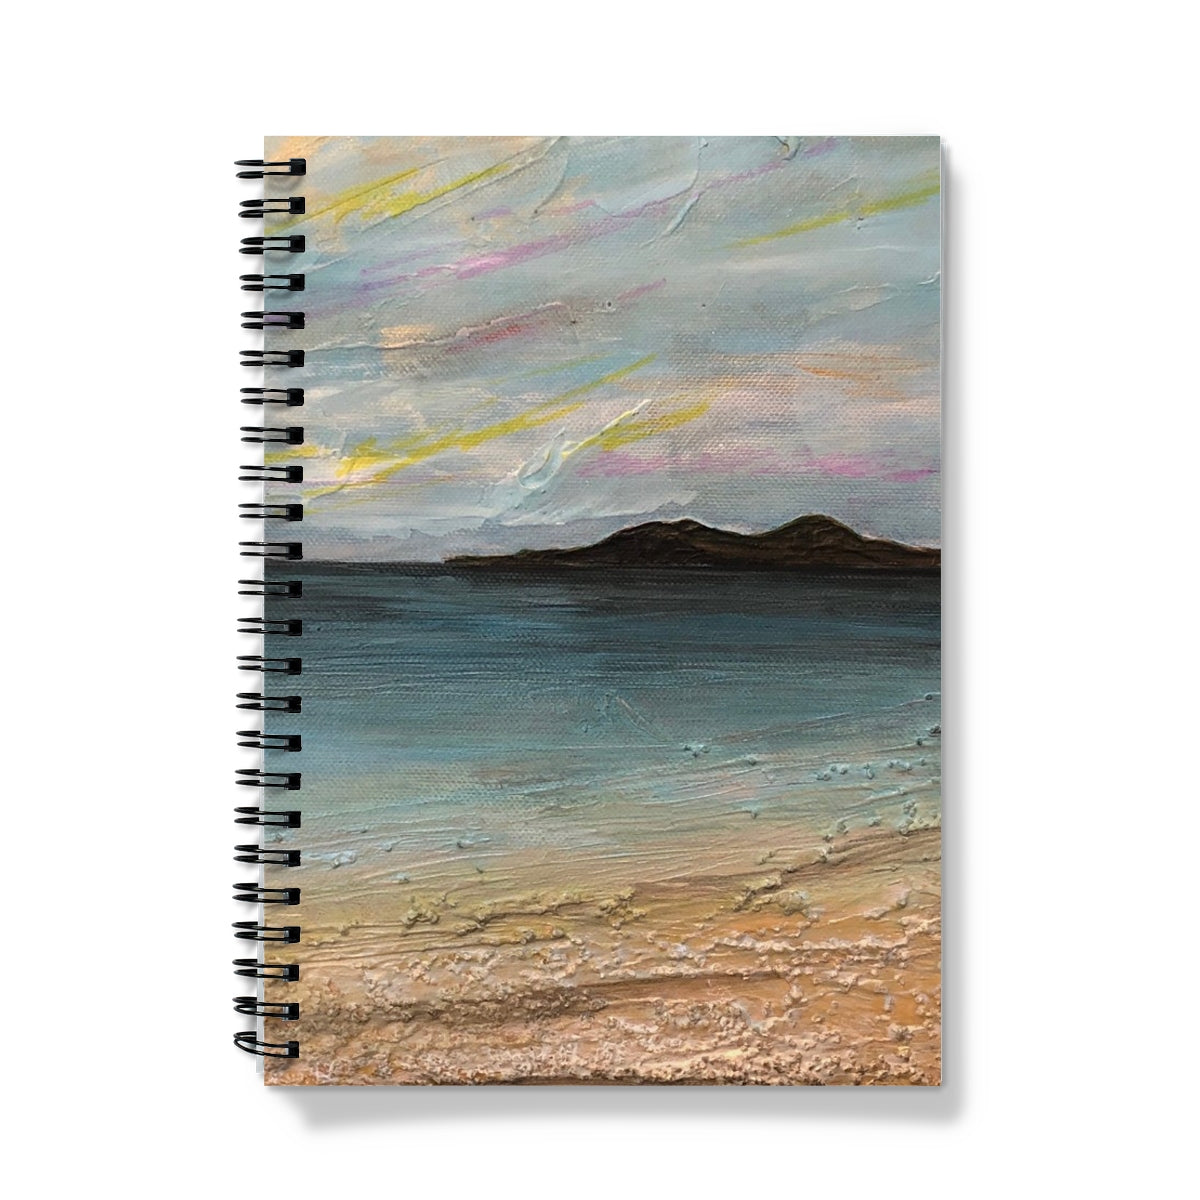 Garrynamonie Beach South Uist Art Gifts Notebook-Journals & Notebooks-Hebridean Islands Art Gallery-A5-Graph-Paintings, Prints, Homeware, Art Gifts From Scotland By Scottish Artist Kevin Hunter